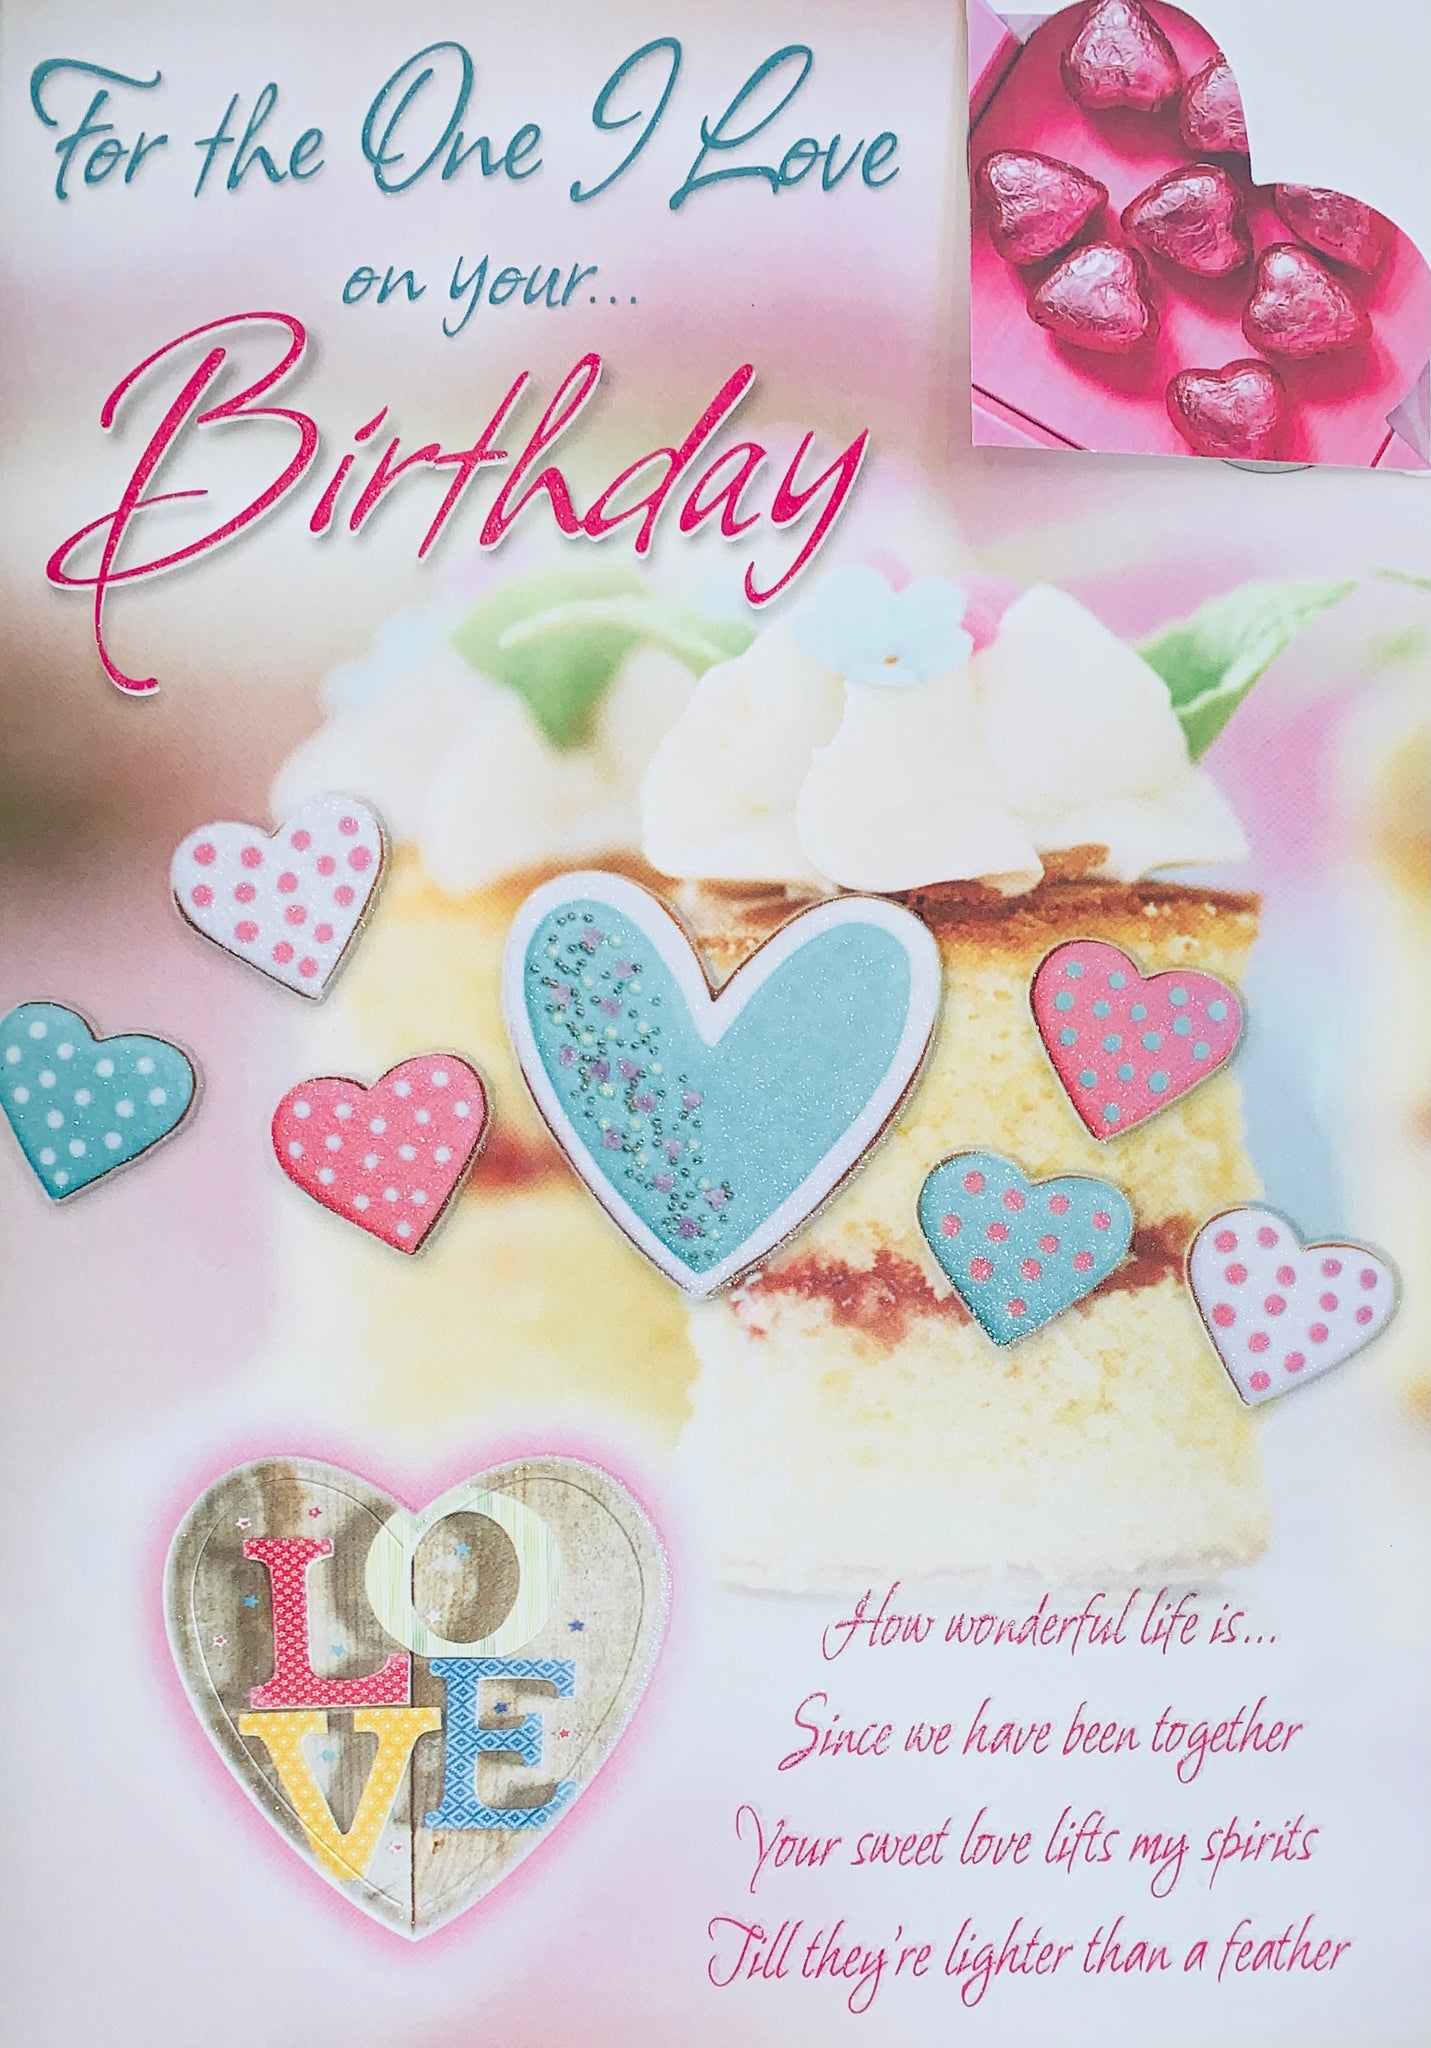 One I love birthday card- hearts and cake